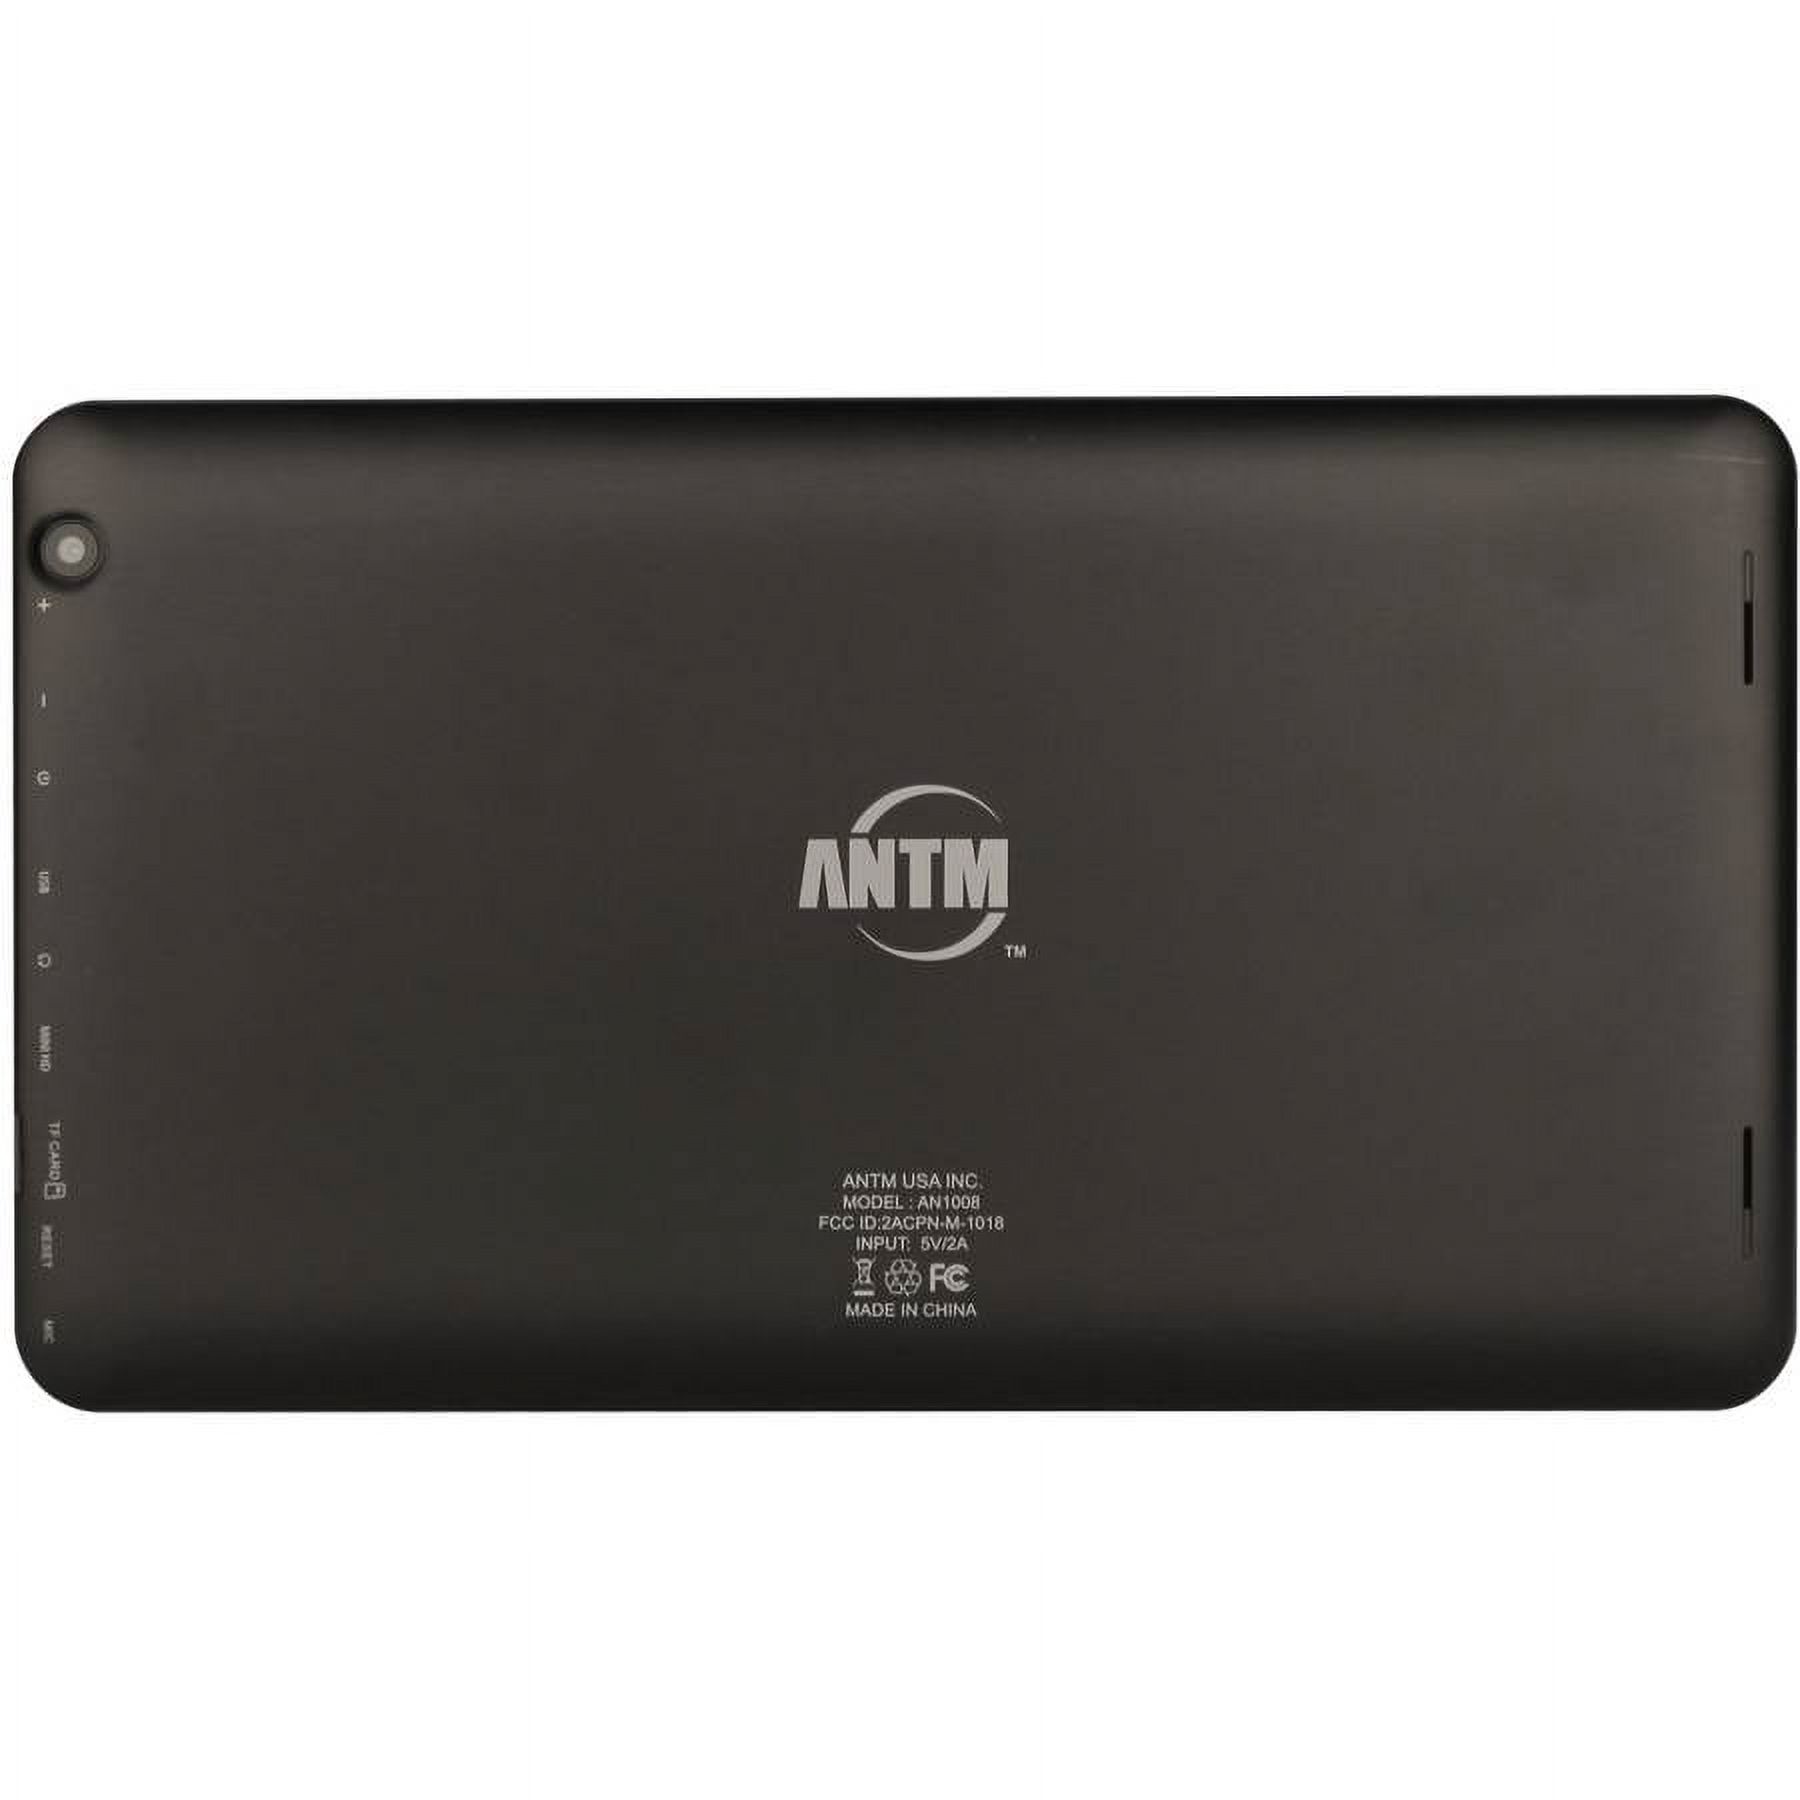 ANTM REVO-1008 - Tablet - Android 4.4 (KitKat) - 8 GB - 10.1" TN (1024 x 600) - USB host - microSD slot - black - image 3 of 4